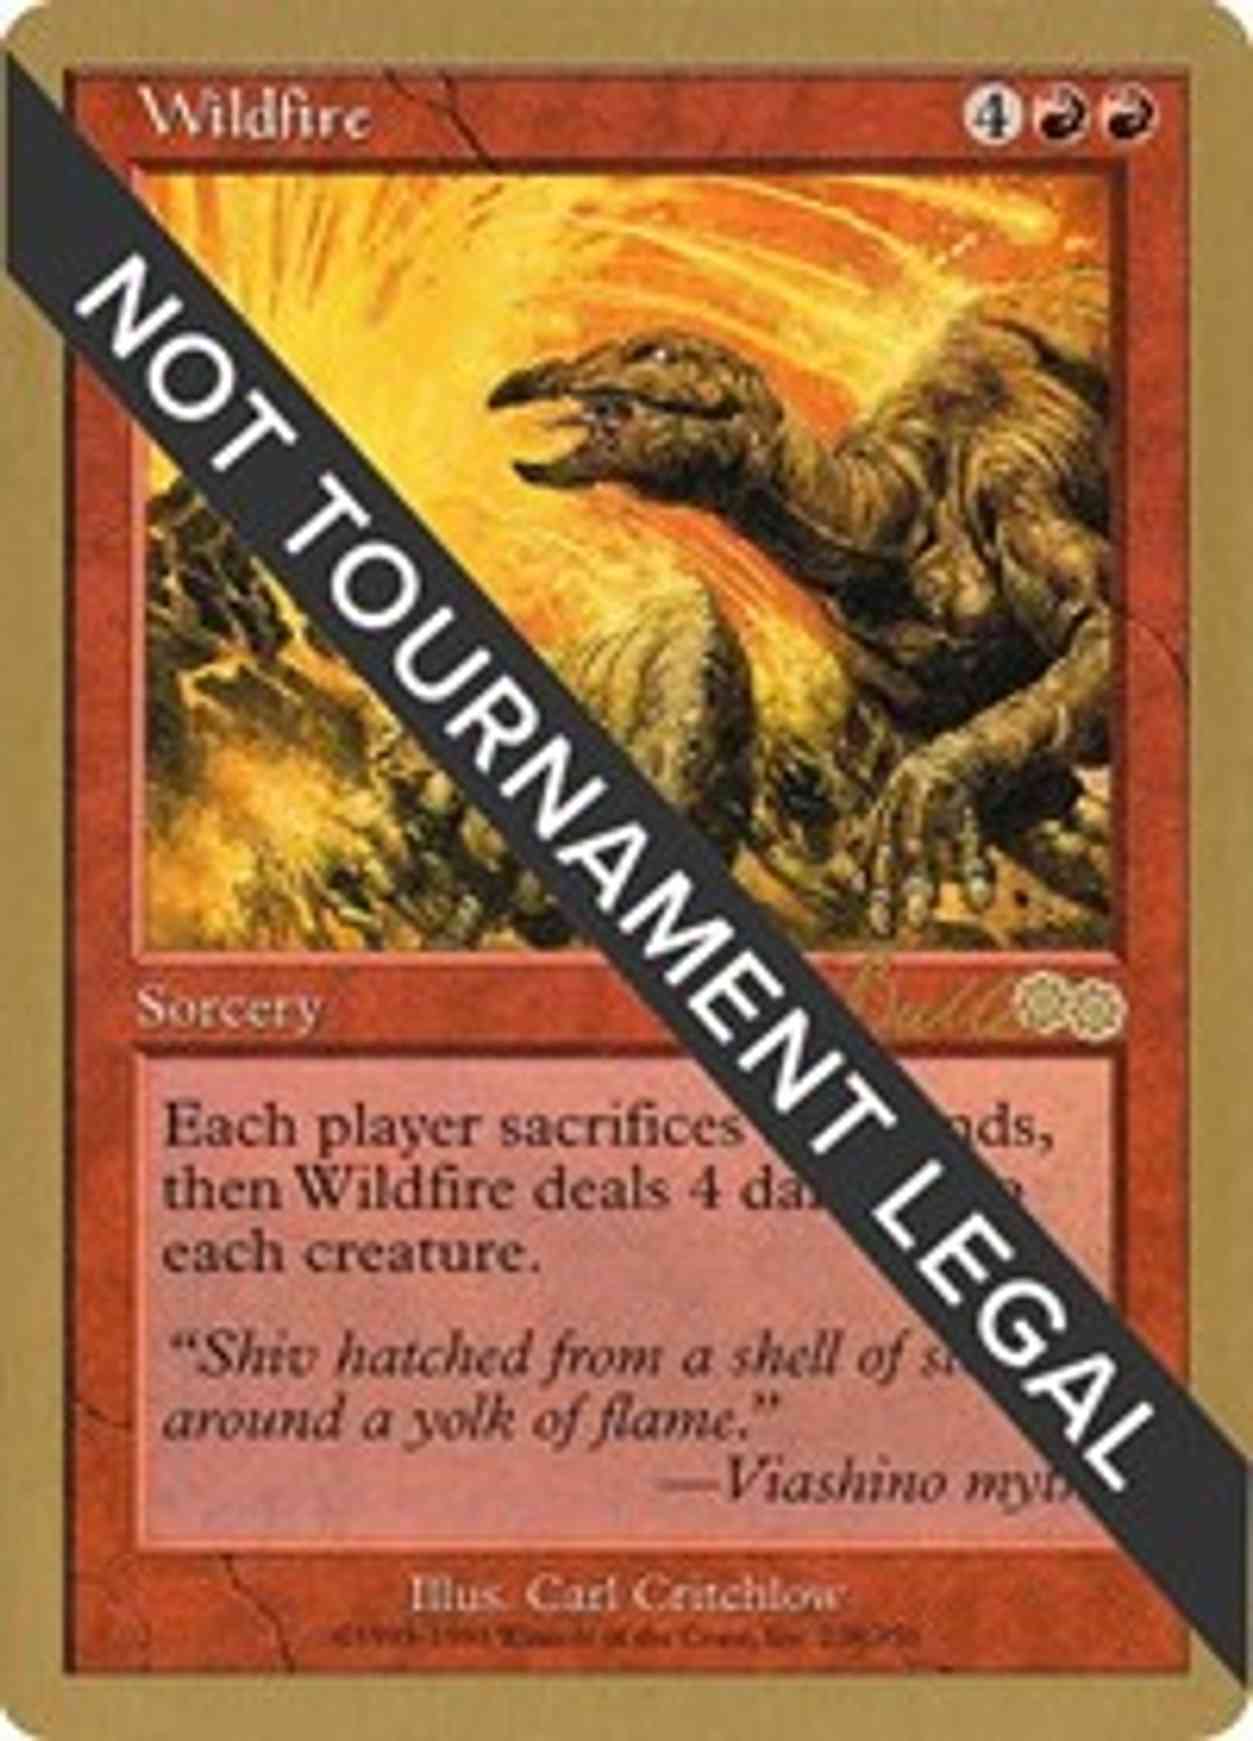 Wildfire - 1999 Kai Budde (USG) magic card front